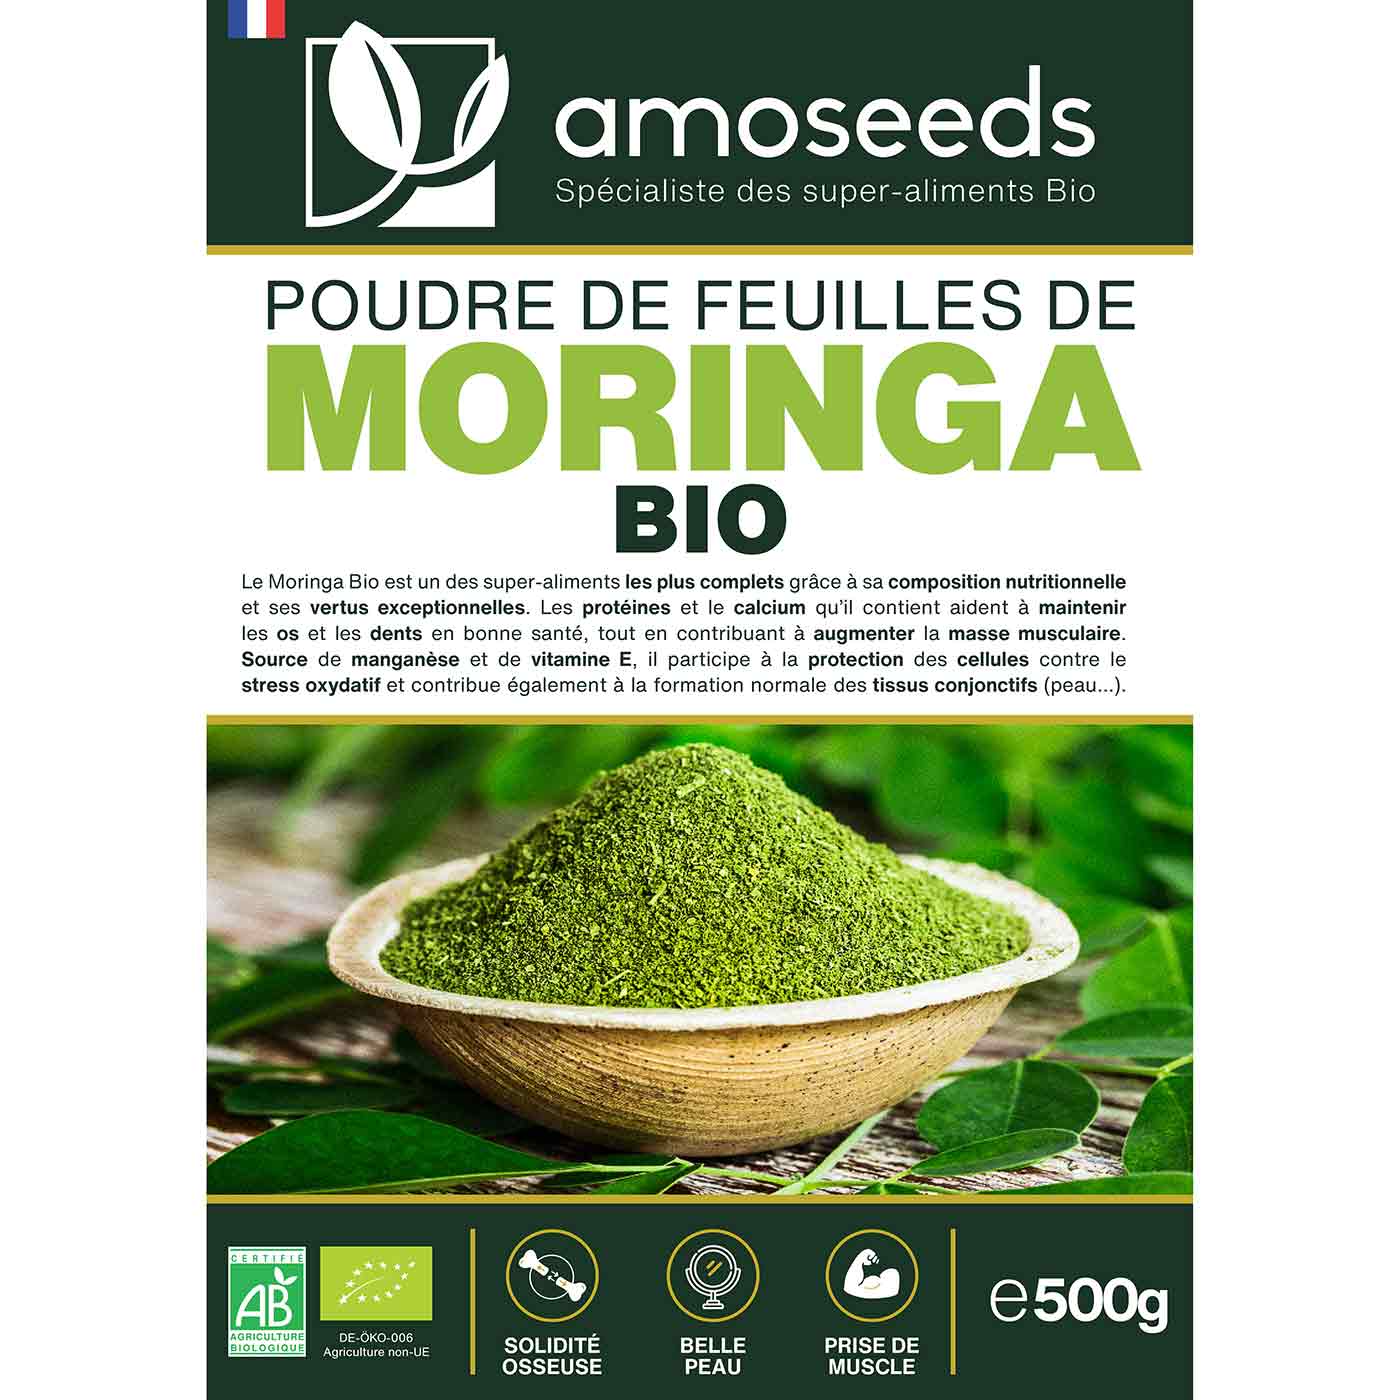 Moringa poudre bio amoseeds specialiste des super aliments bio